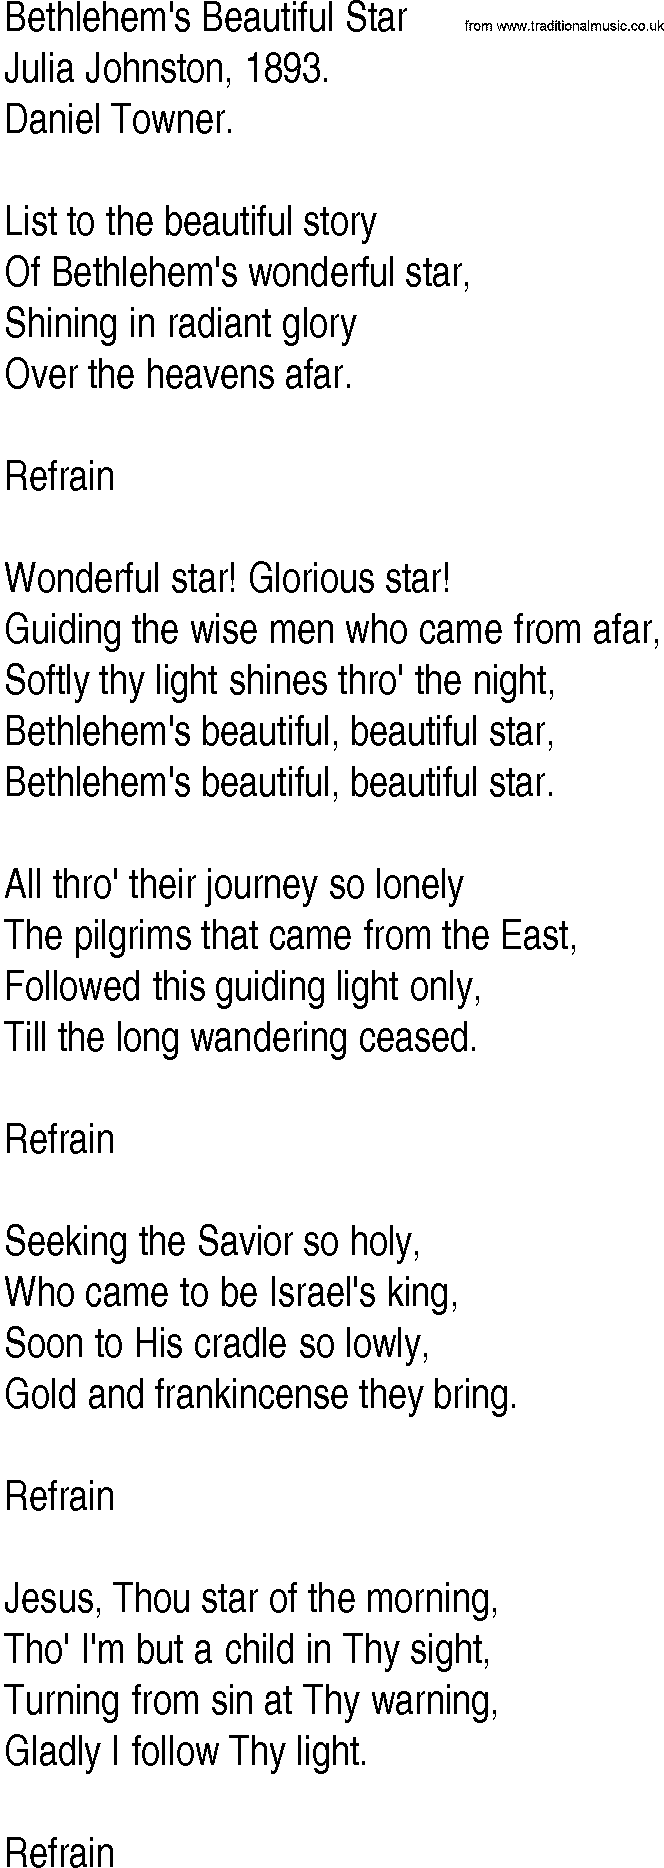 Hymn and Gospel Song: Bethlehem's Beautiful Star by Julia Johnston lyrics